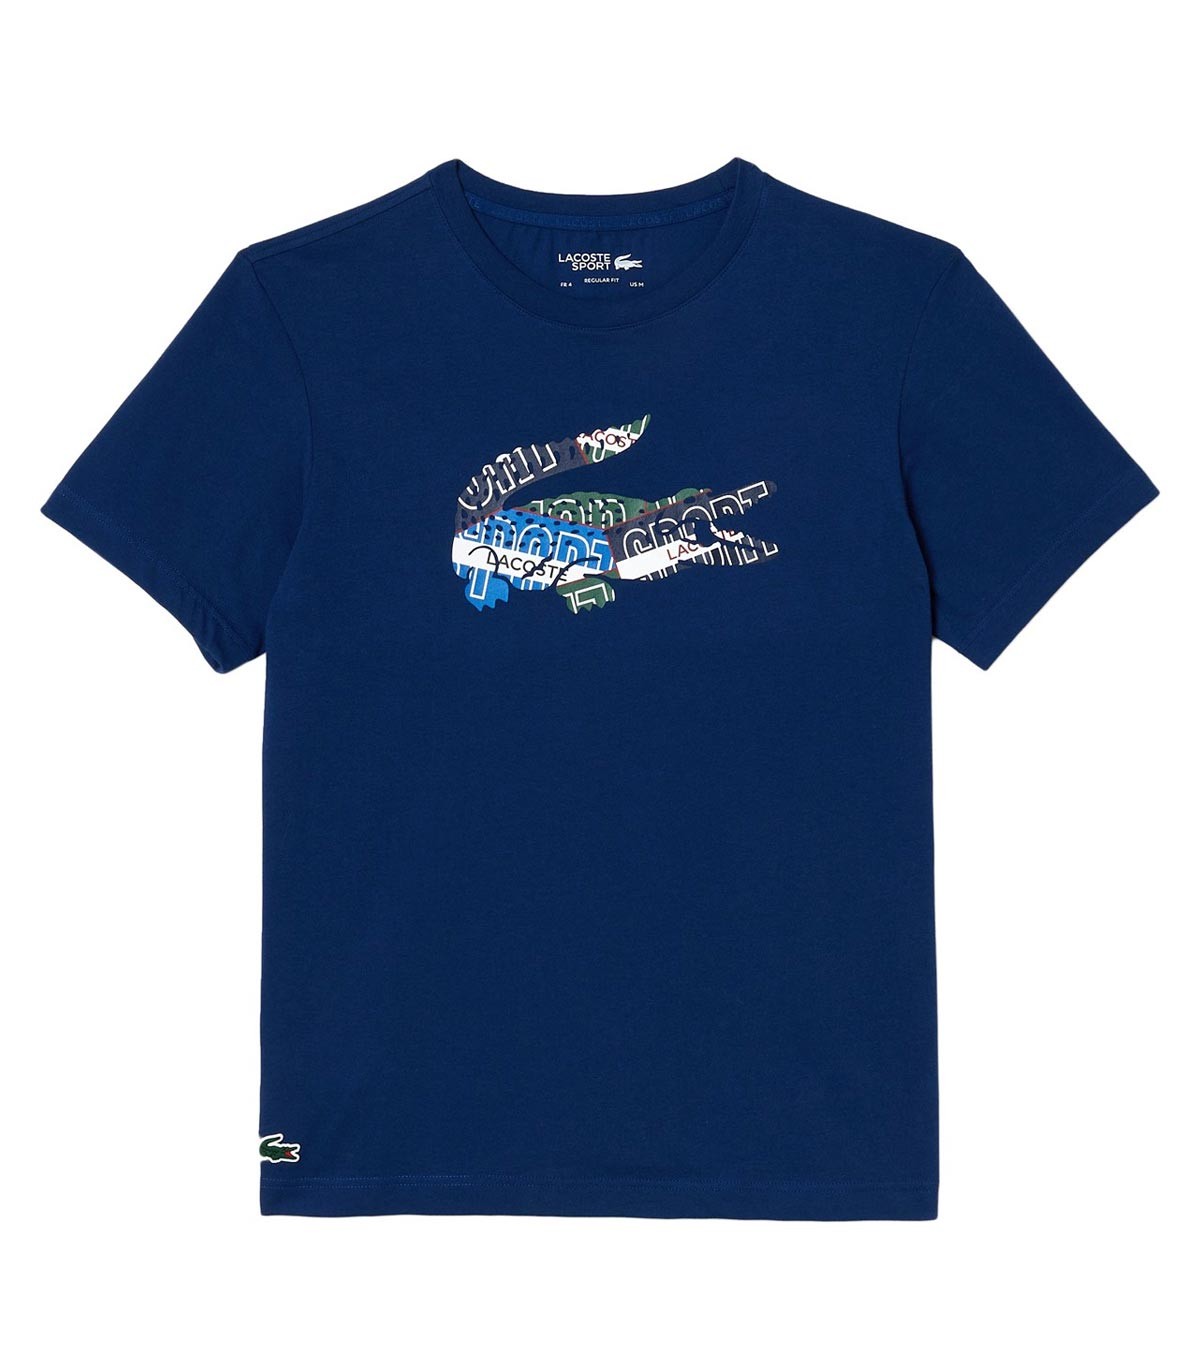 Lacoste - Camiseta Trainning - Marino